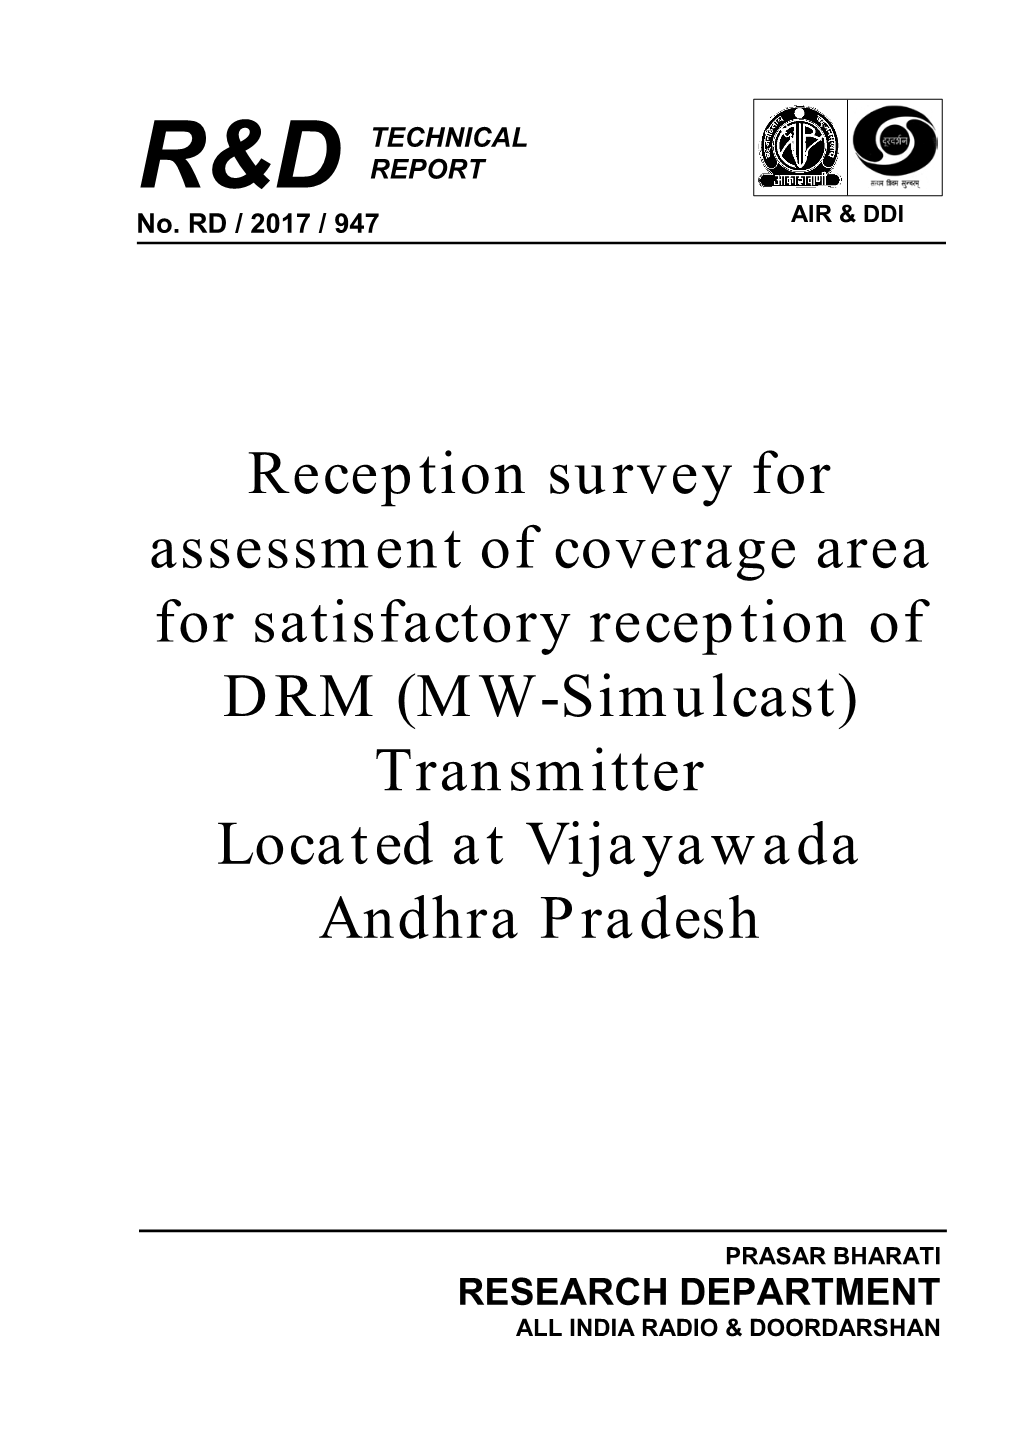 Reception Survey Report of 100 Kw AM-DRM Transmitter, Vijaywada in Simulcast Mode